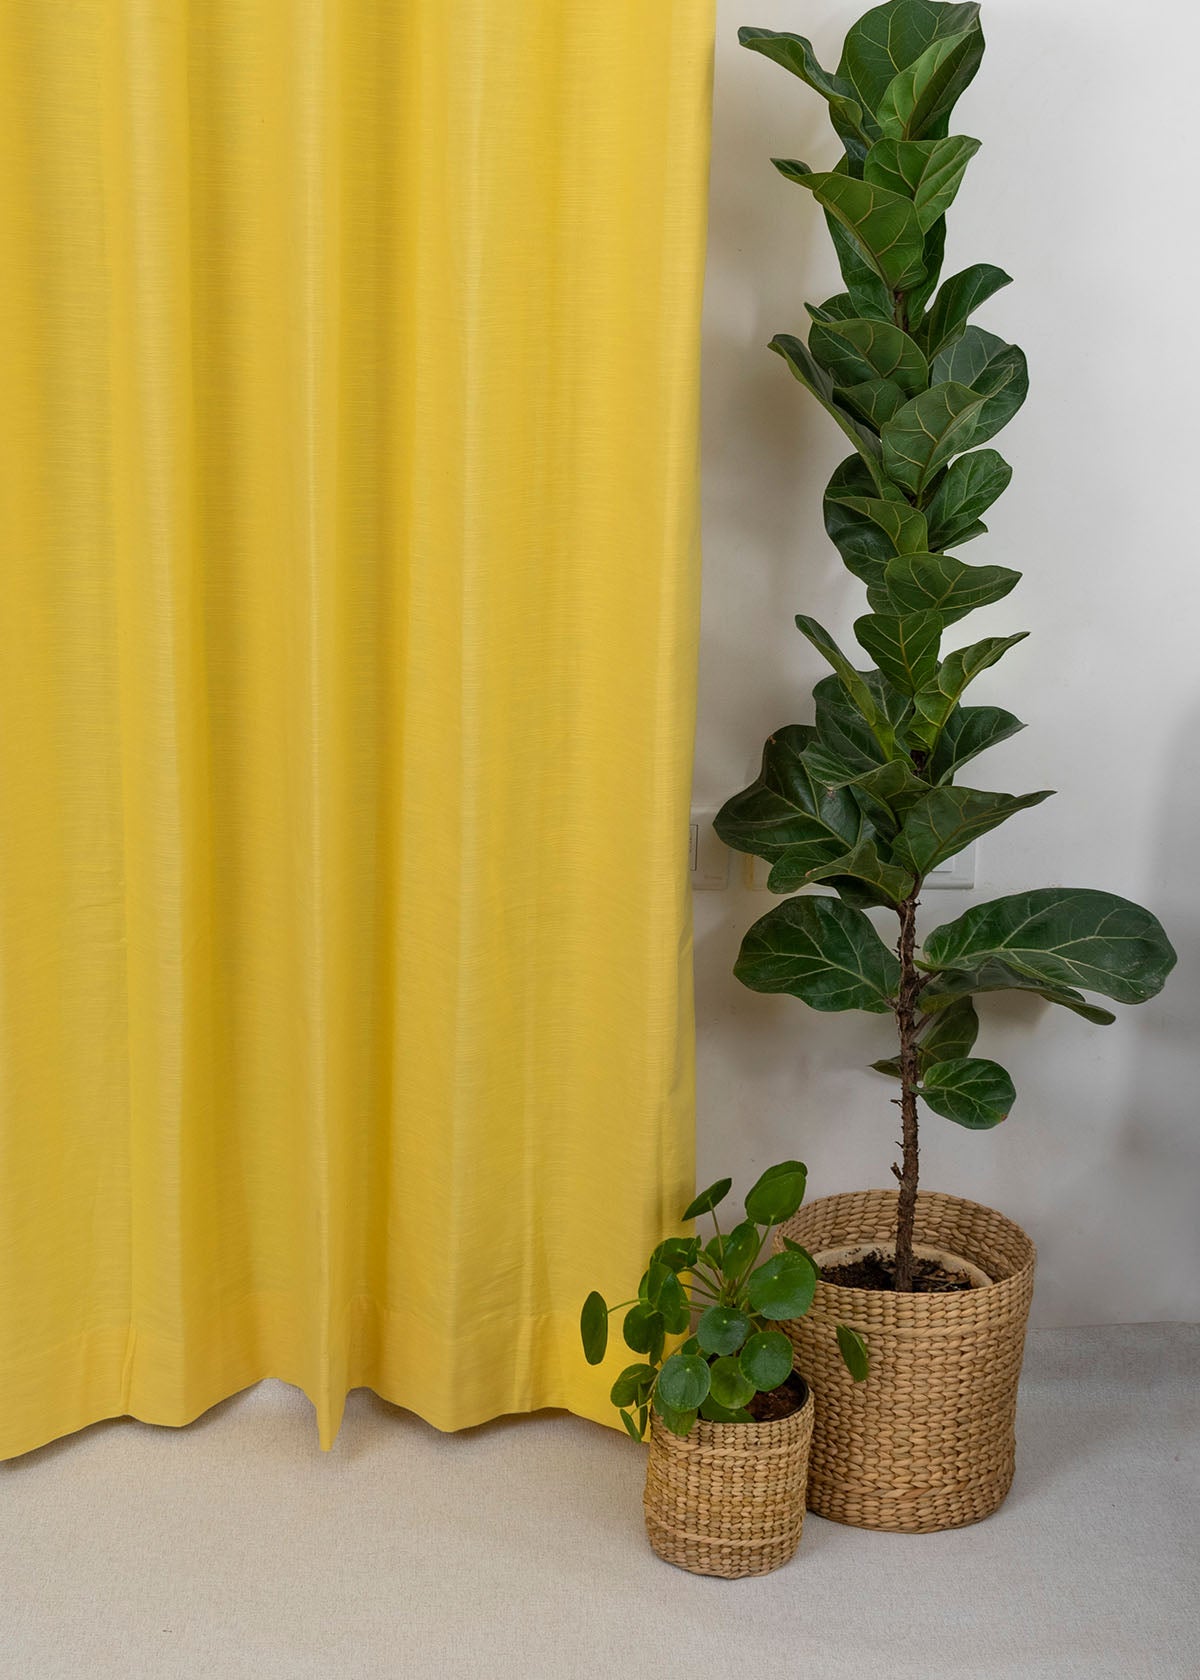 Solid Primrose yellow 100% Customizable Cotton plain curtain for bedroom - Room darkening